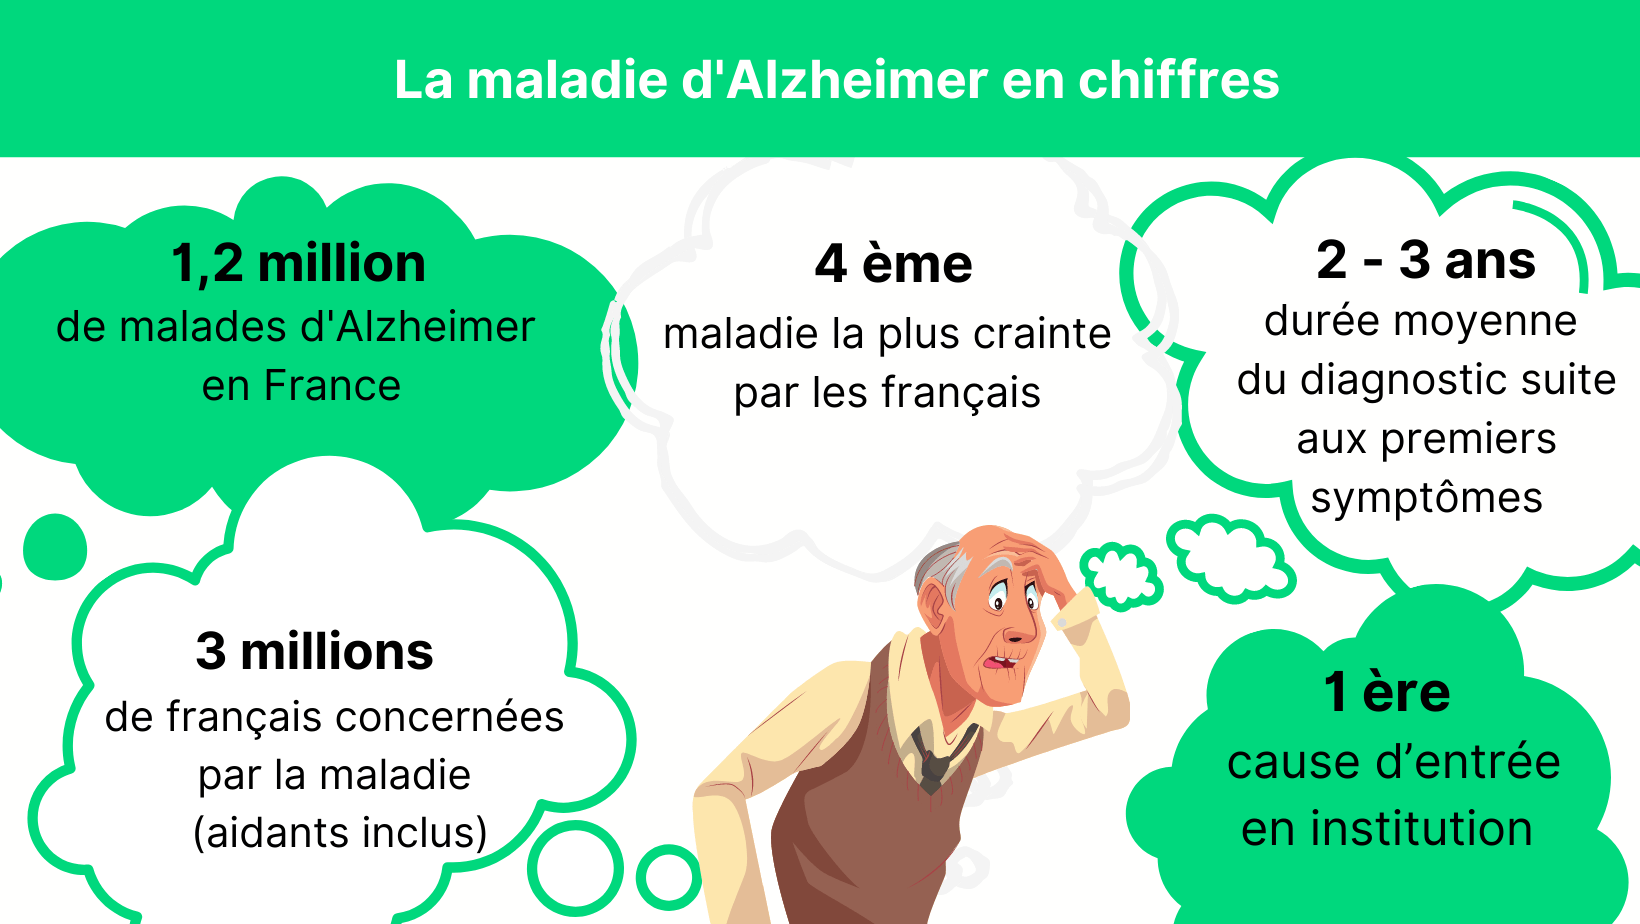 La maladie d'Alzheimer en chiffre